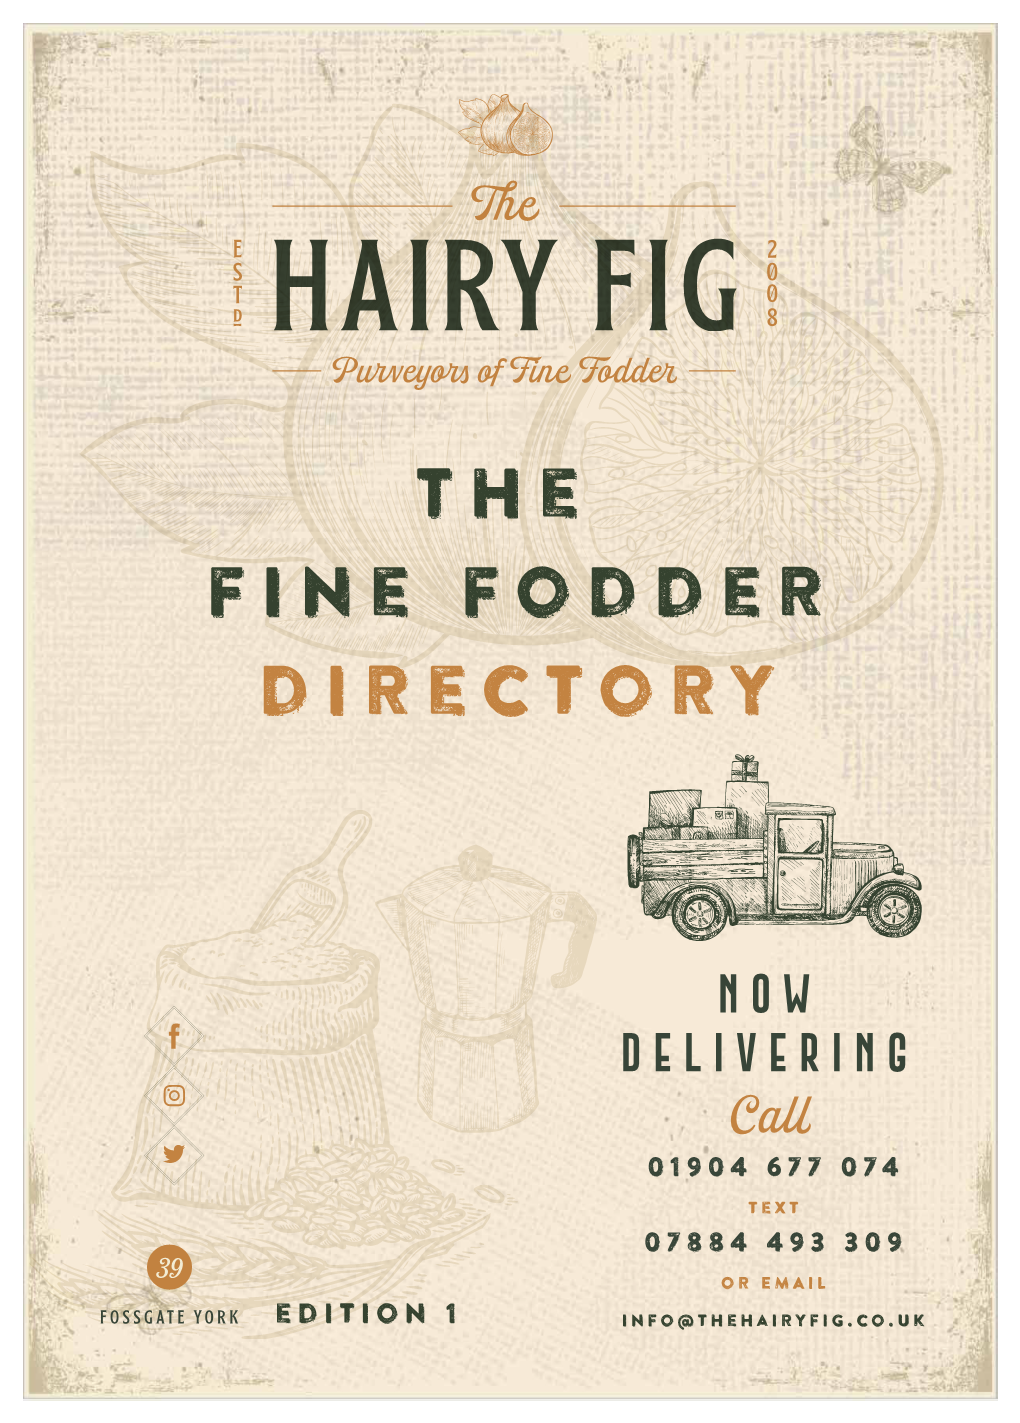 The Fine Fodder Directory